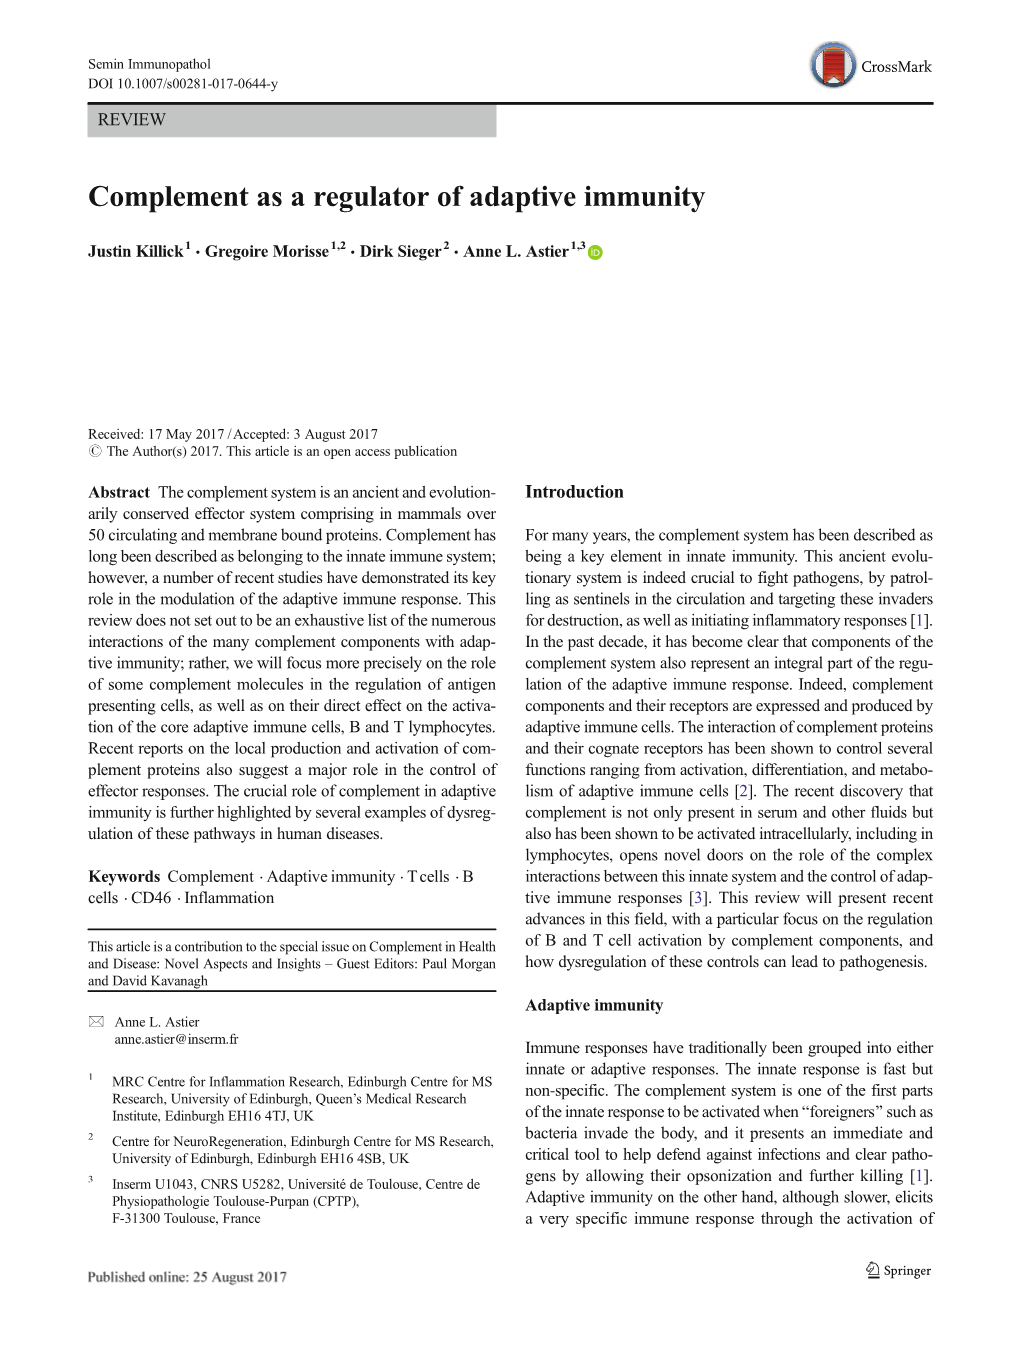 Complement As a Regulator of Adaptive Immunity